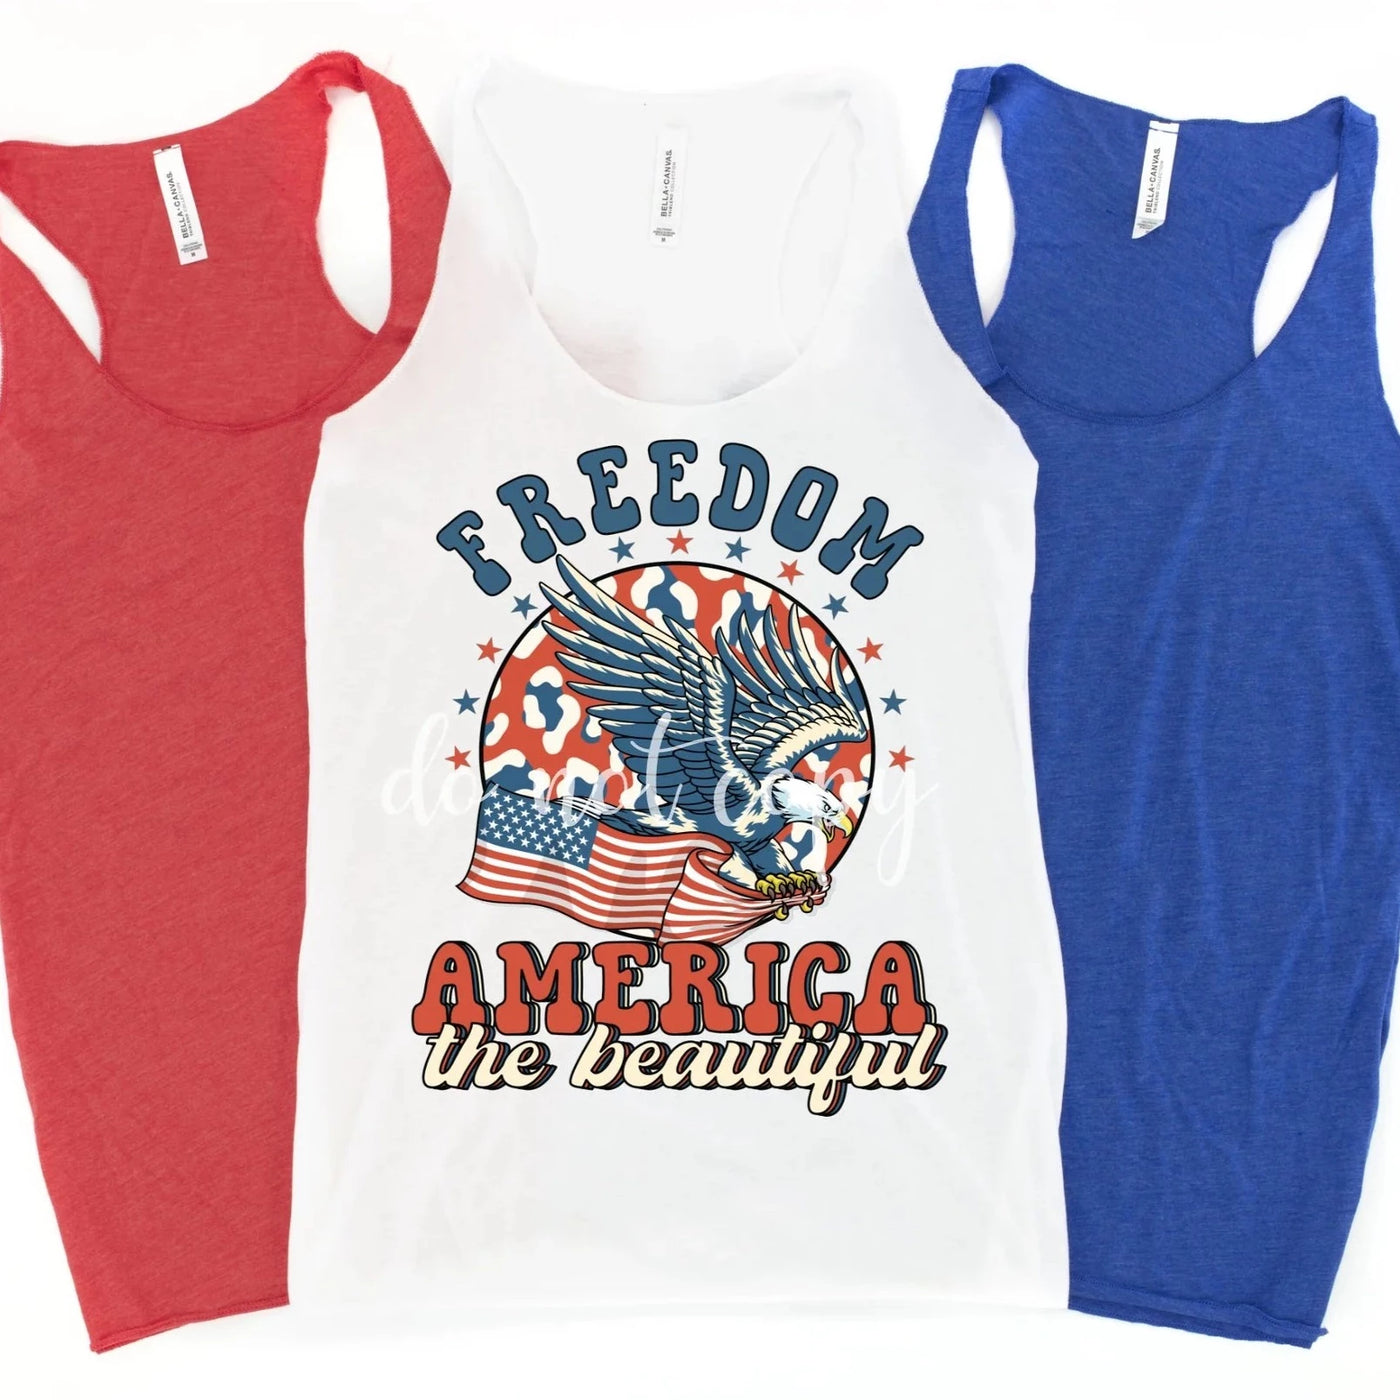 "America the Beautiful" Bella Canvas Racerback Tank or T-shirt